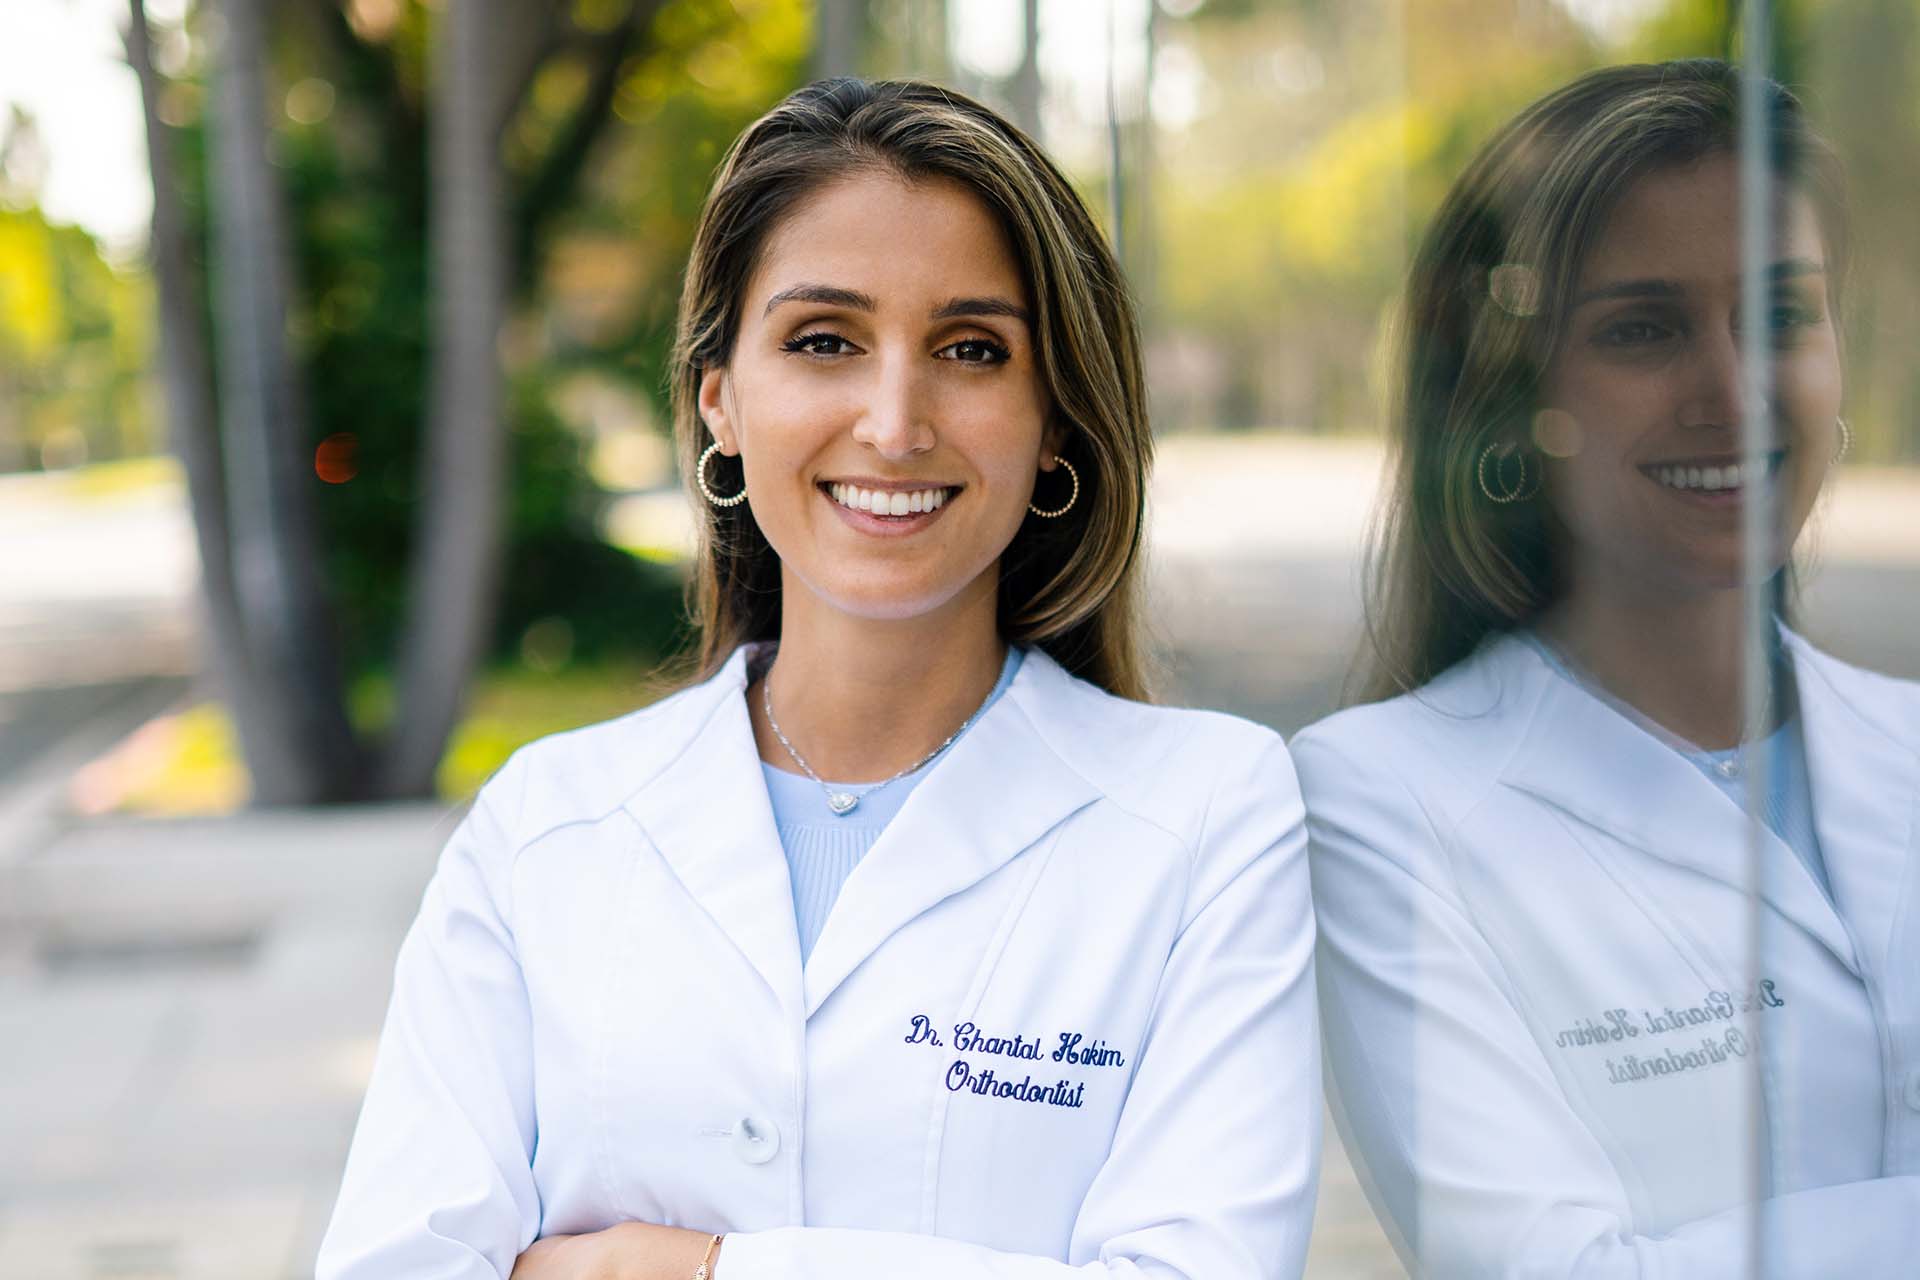 Dr Chantal Hakim of the Orthospaceship - Hakim Orthodontics serving Toluca Lake, Los Angeles